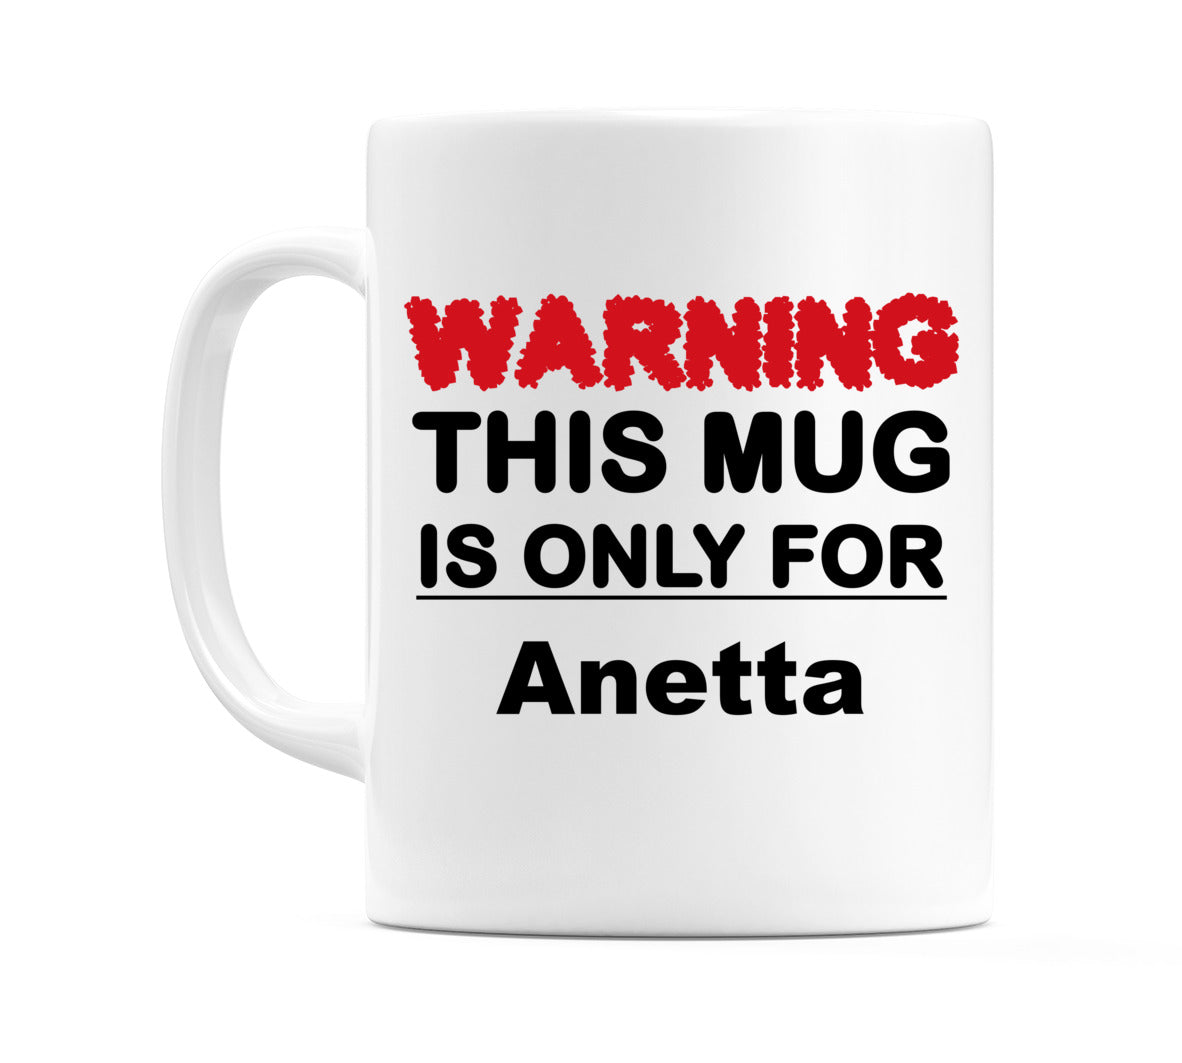 Warning This Mug is ONLY for Anetta Mug